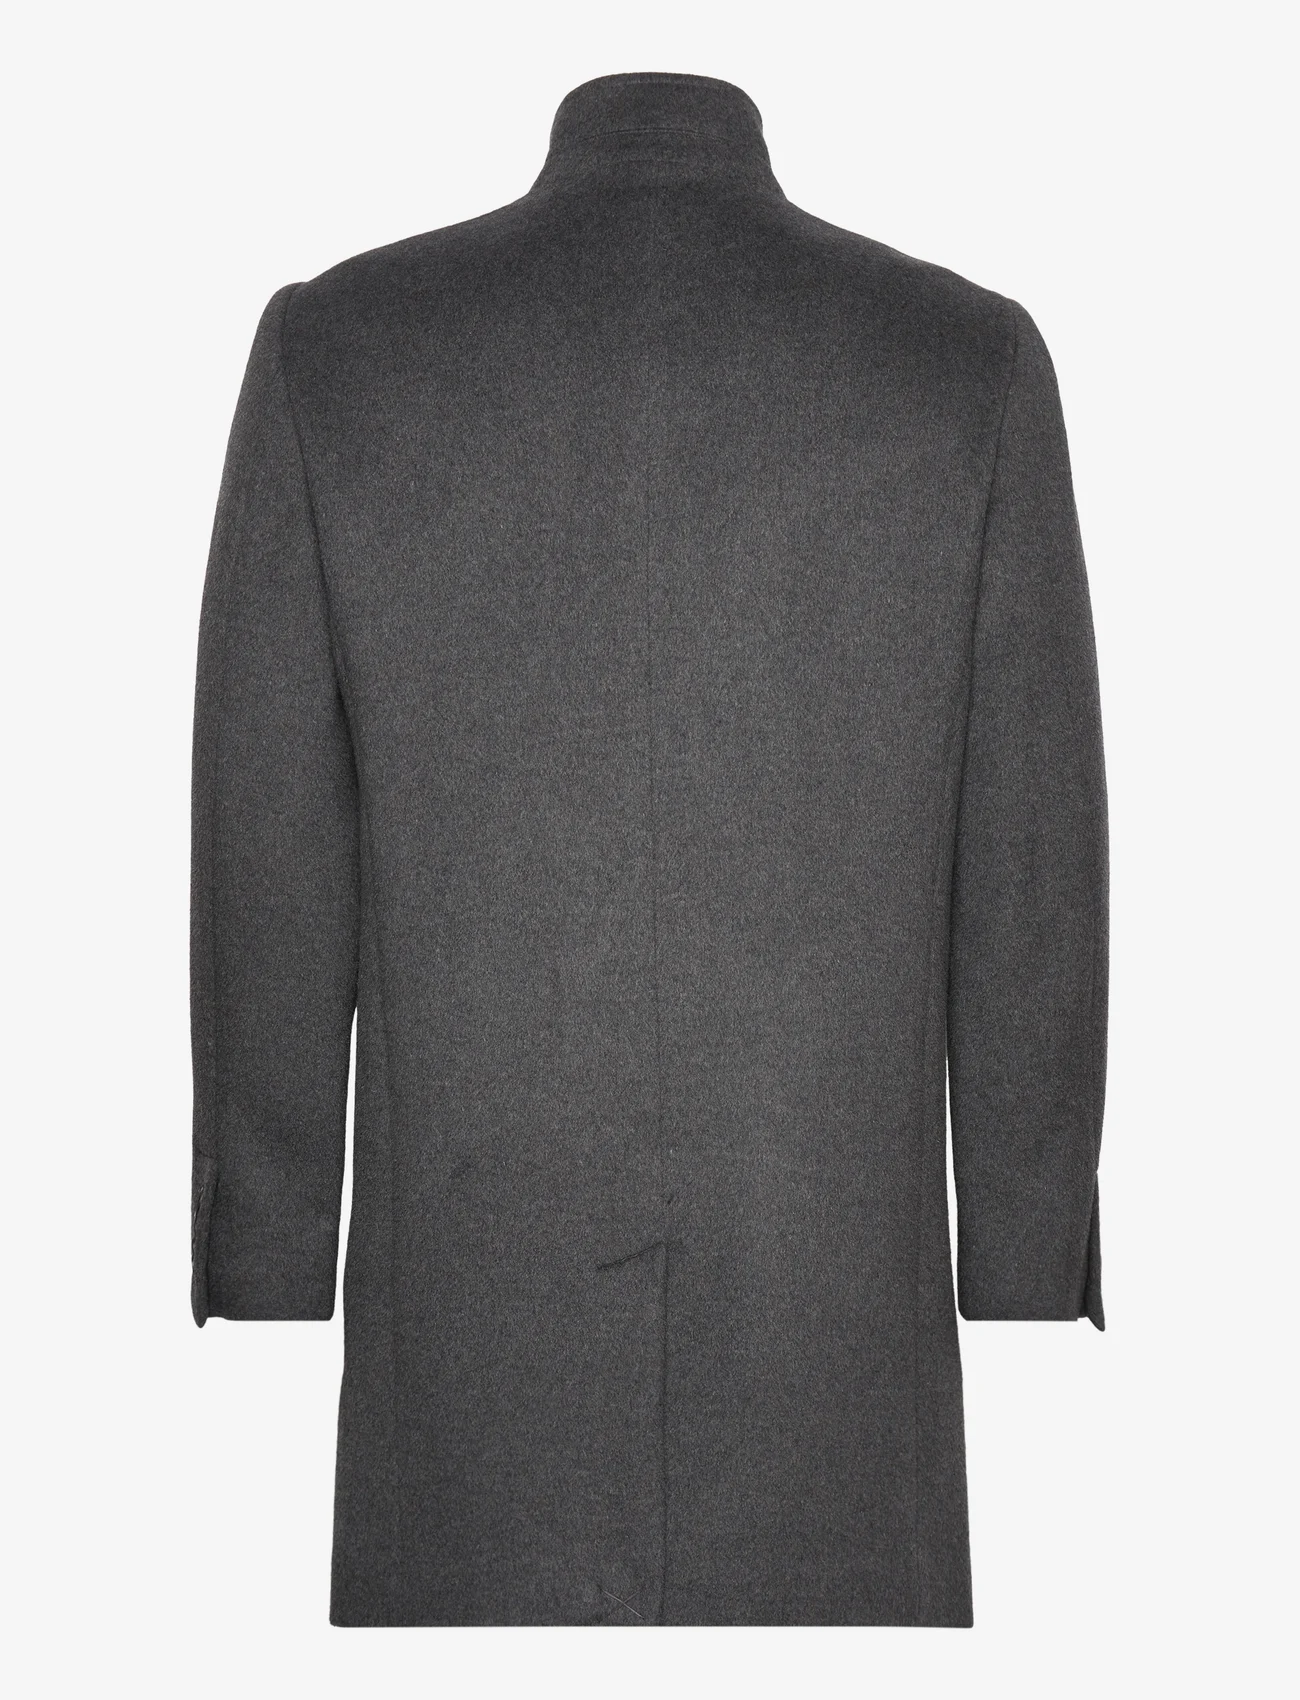 Bruuns Bazaar - KatBBAustin coat - winterjassen - toffee mel - 1